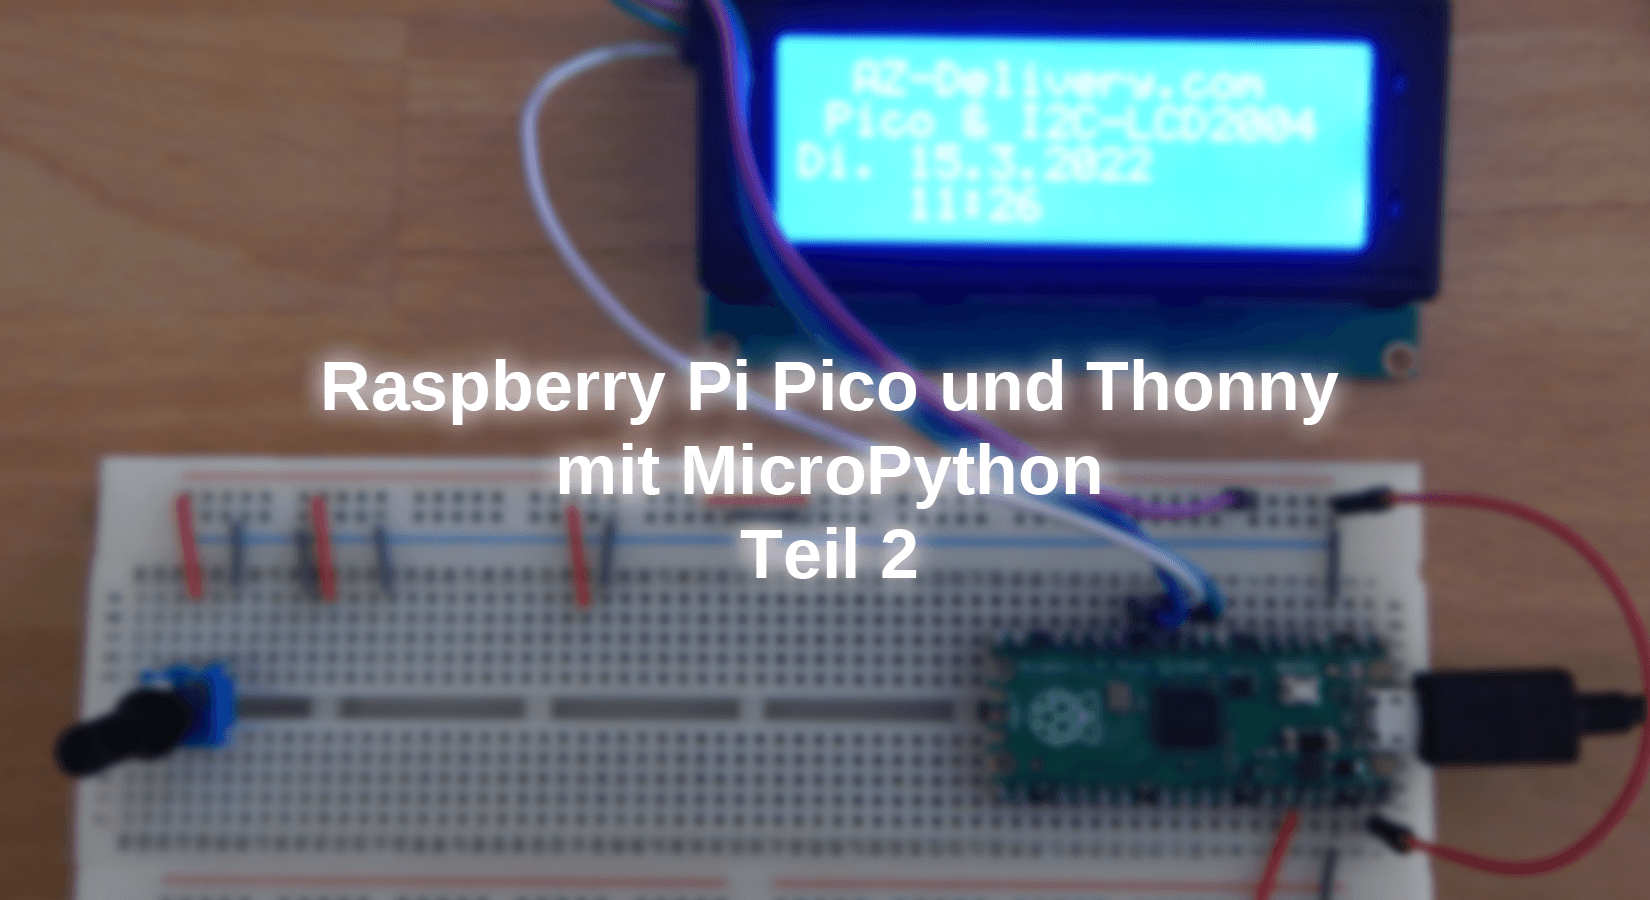 Raspberry Pi Pico und Thonny mit MicroPython - Teil 2 - AZ-Delivery